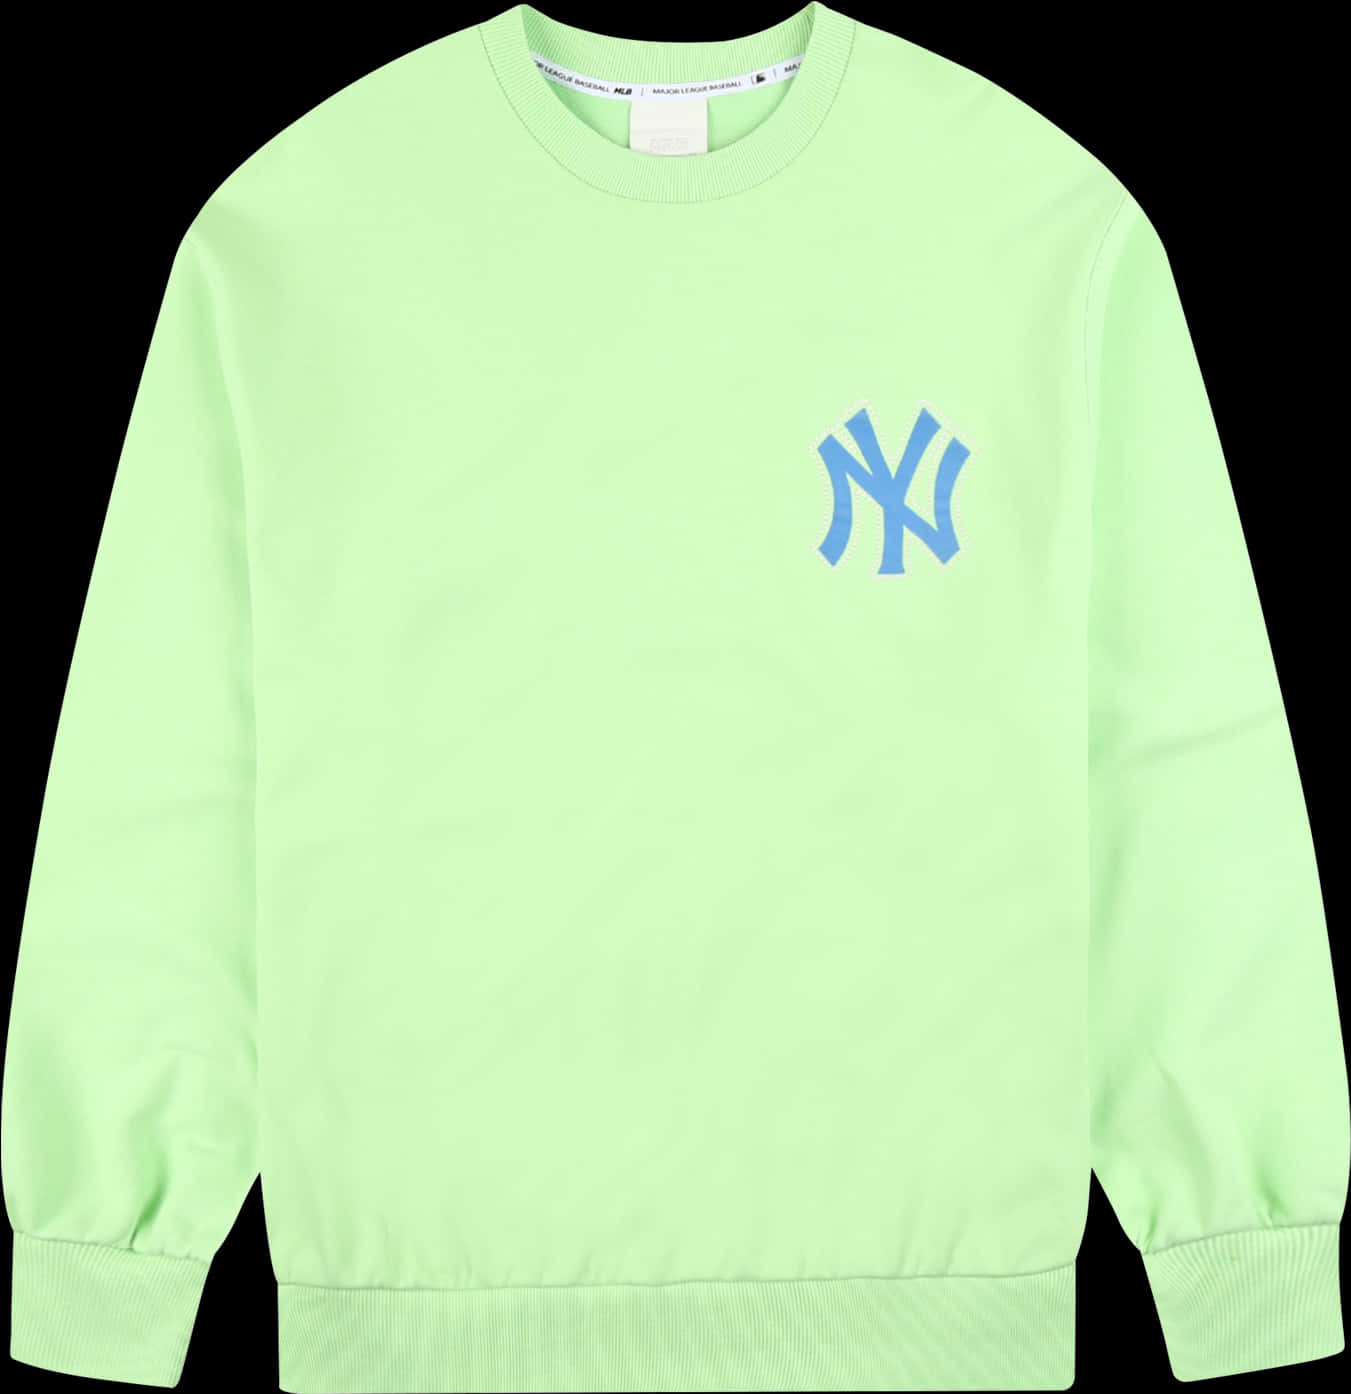 A Green Sweatshirt With A Logo On It